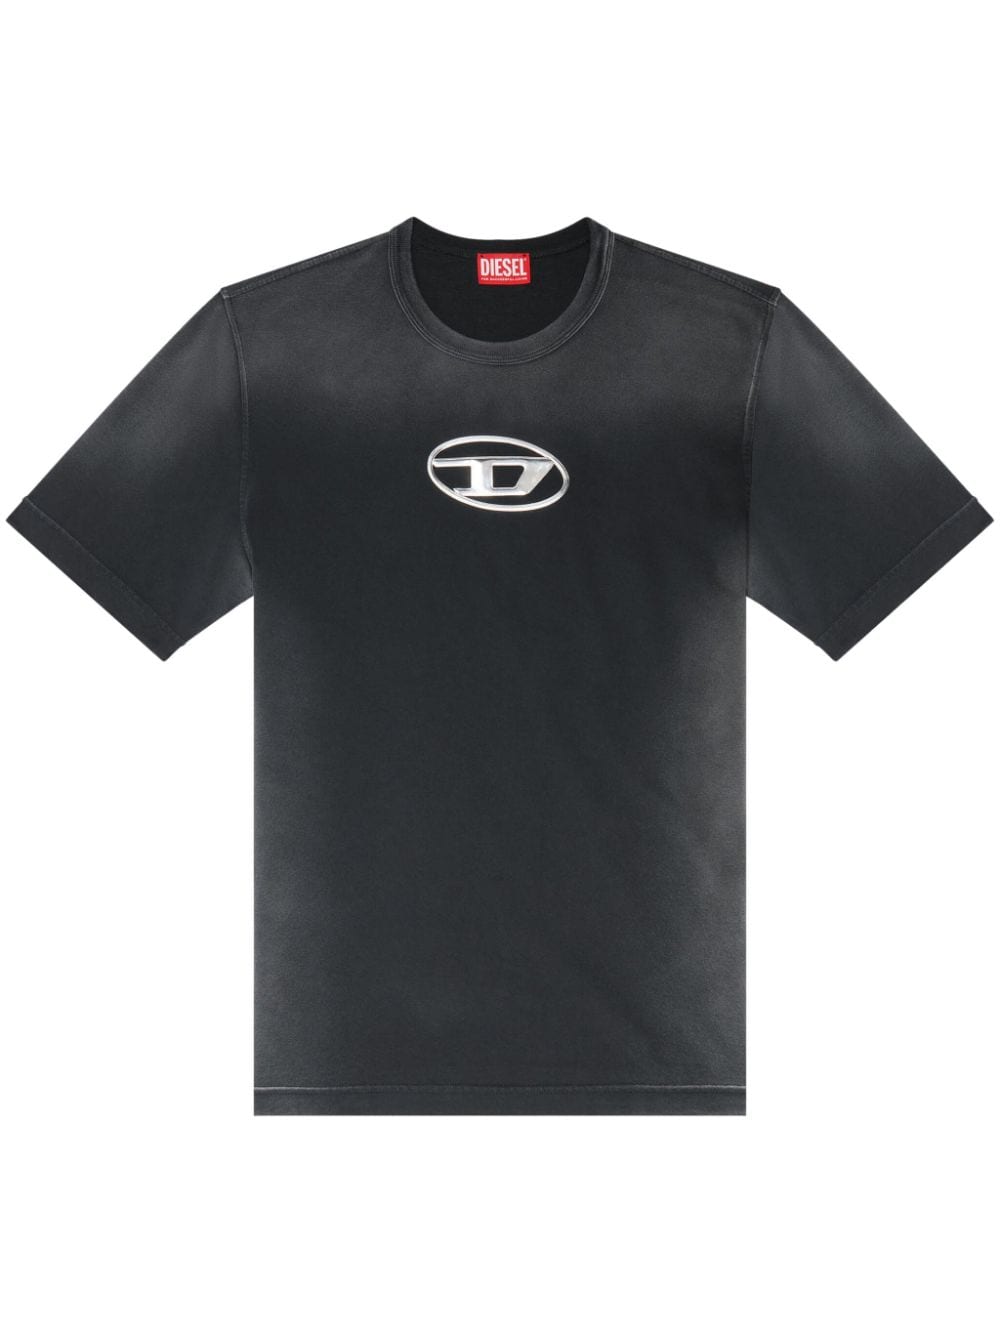 Oval D cut-out T-shirt